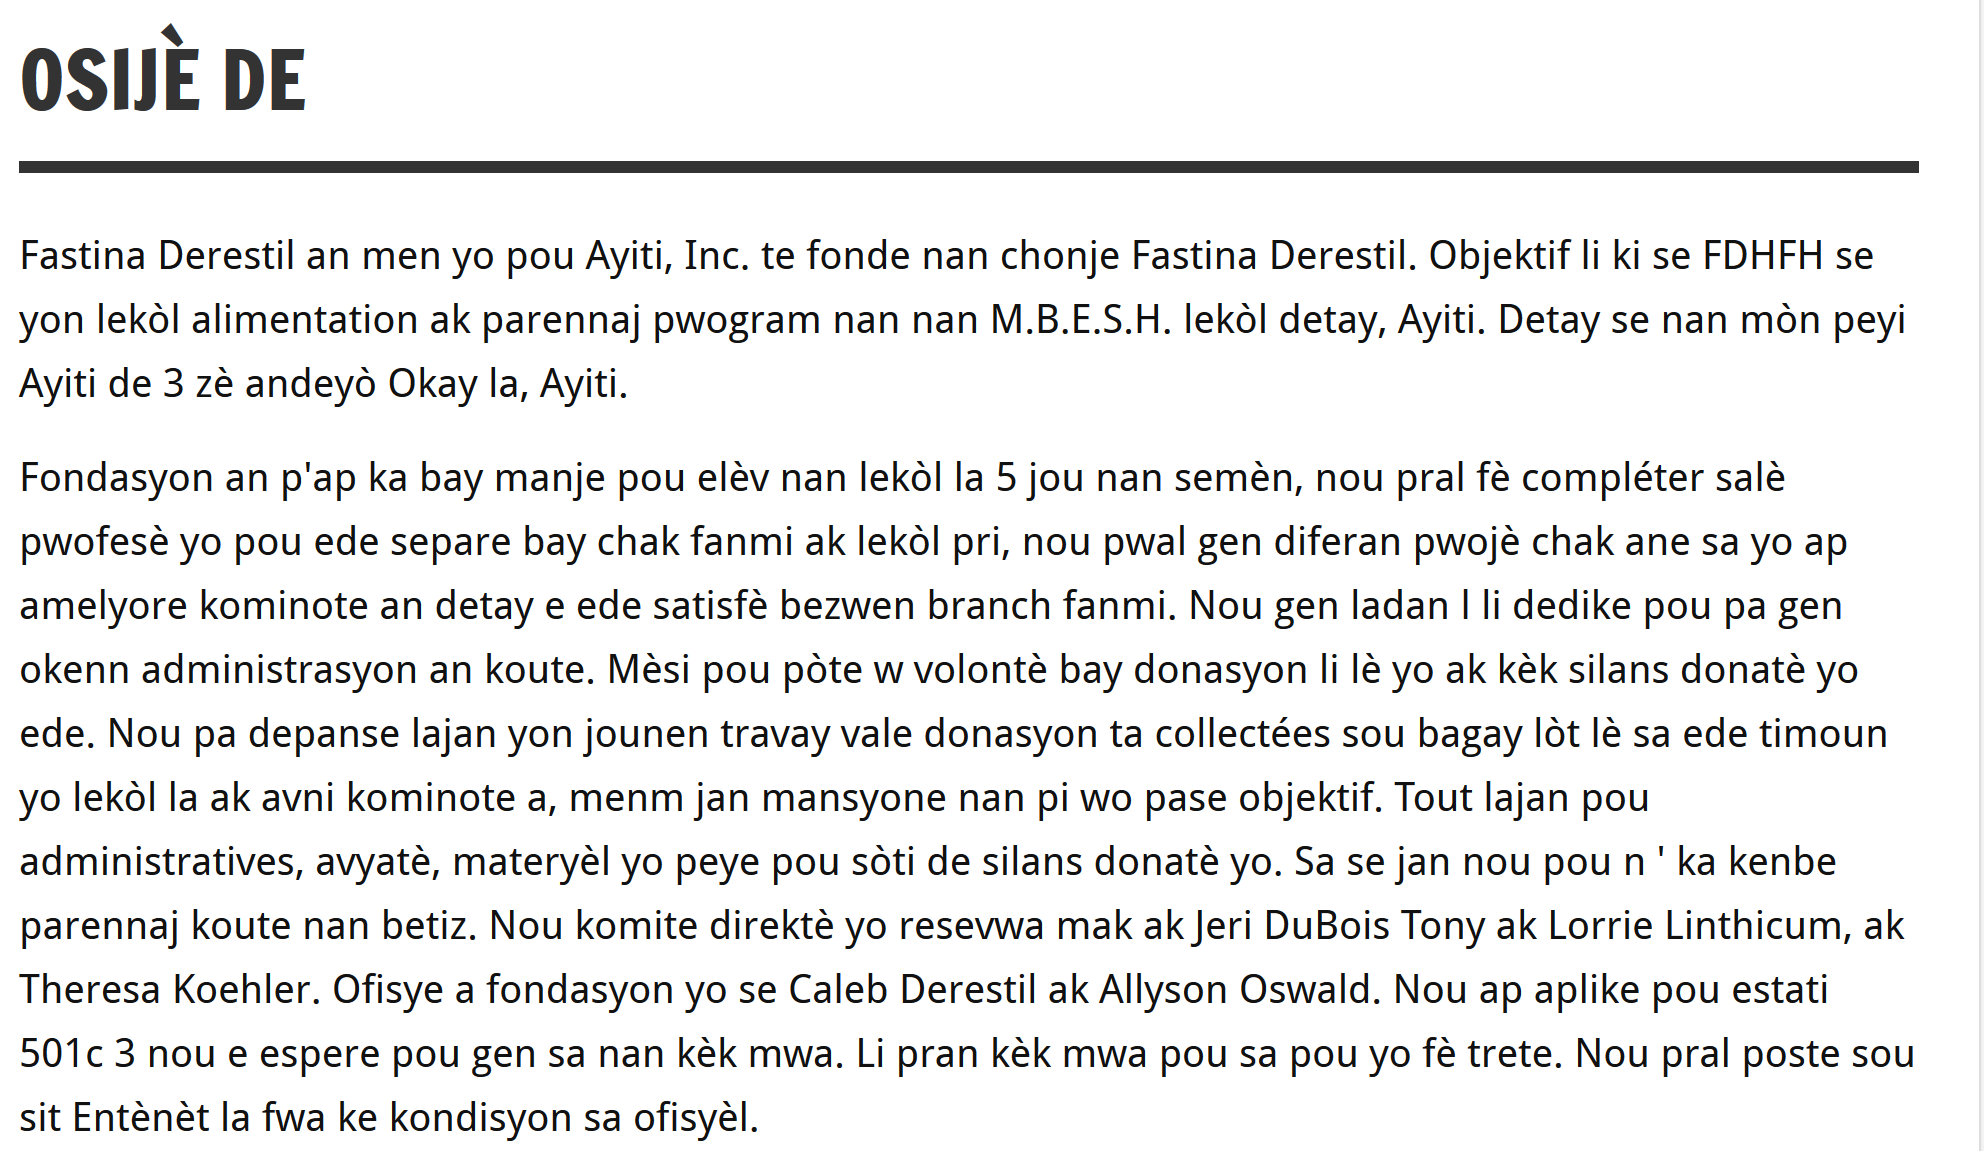 Web site translated to Creole